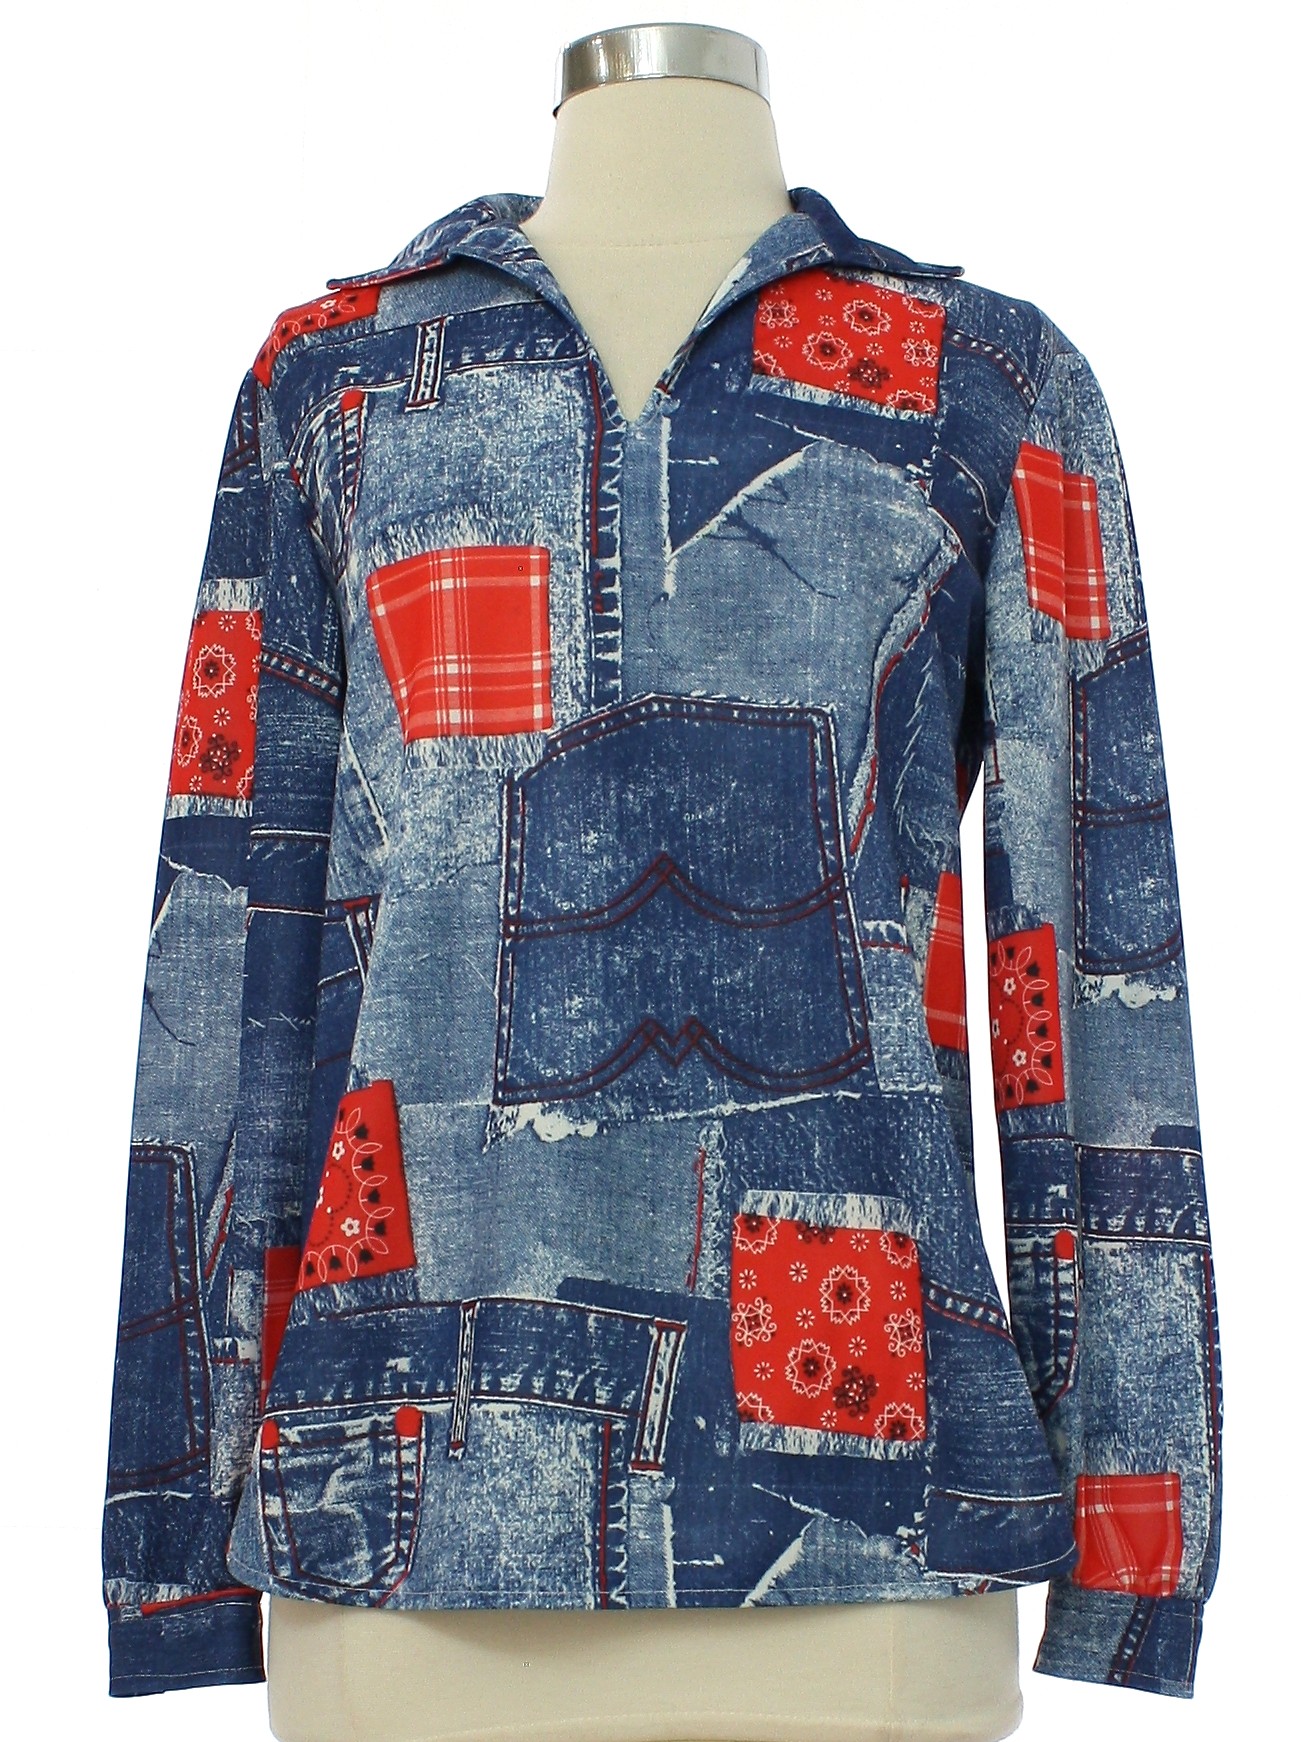 70's home sewn Hippie Shirt: 70s -home sewn- Womens shades of blue